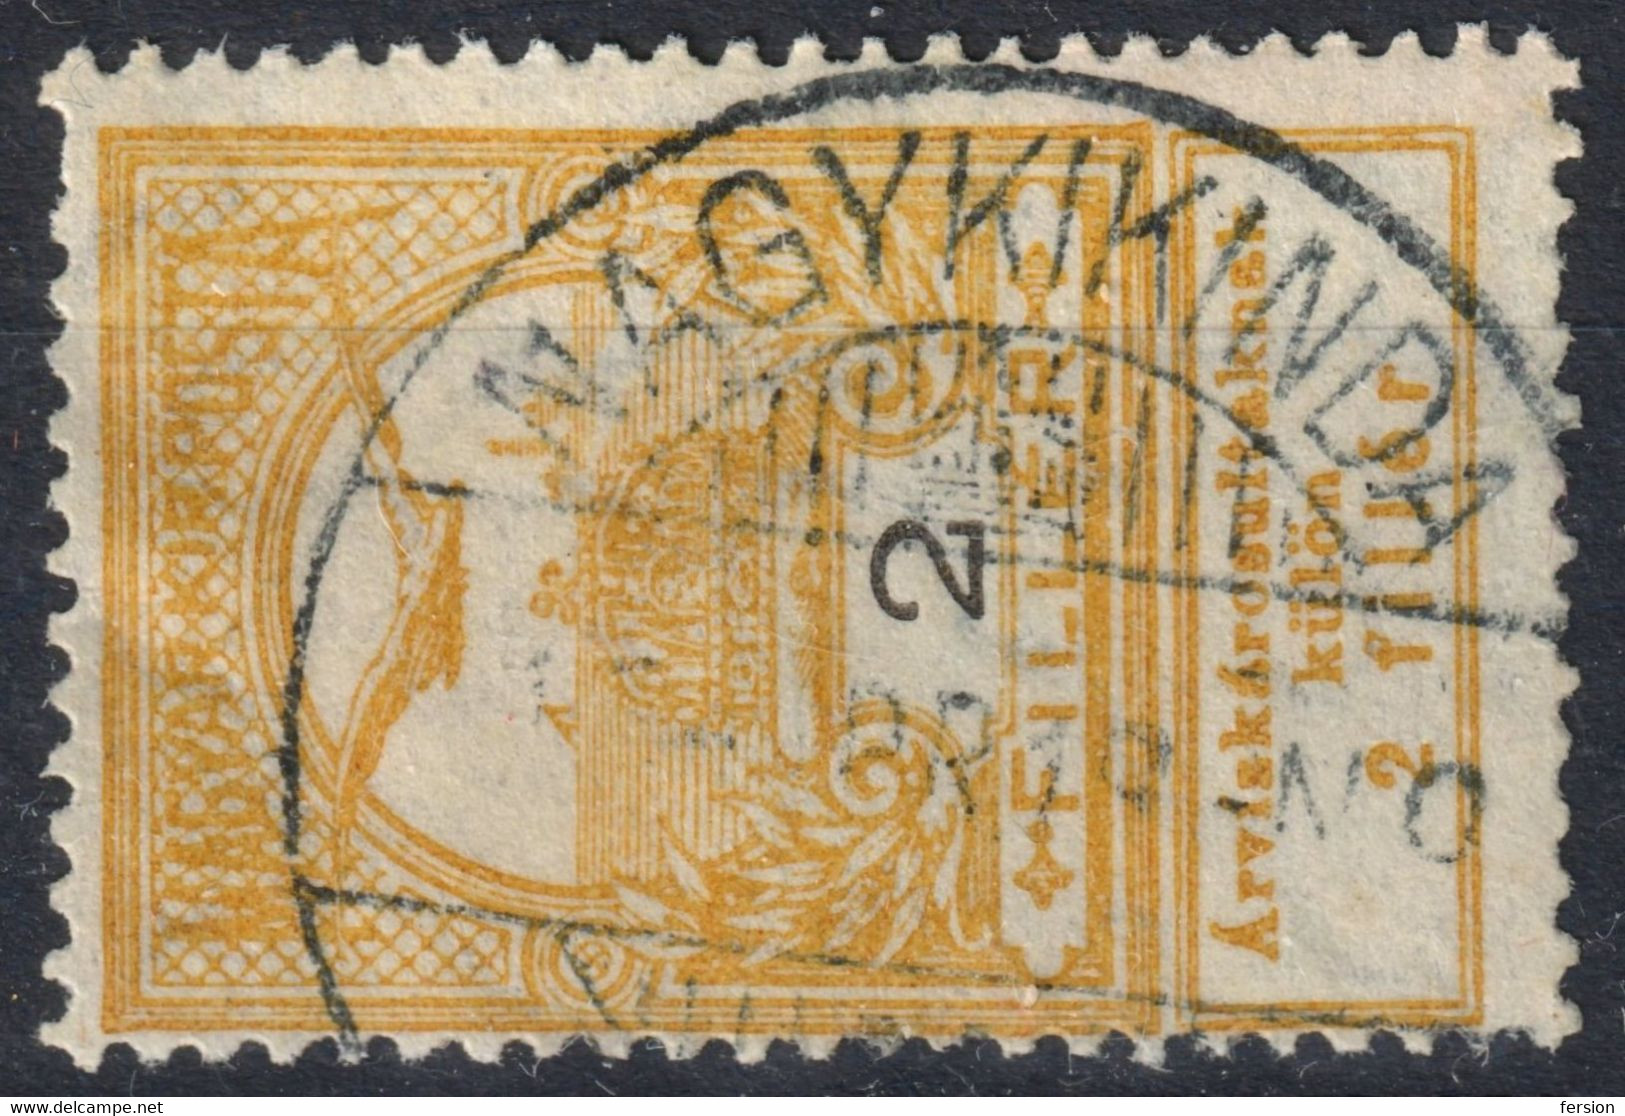 Nagykikinda KIKINDA Postmark / TURUL FLOOD Aid Charity Crown 1913 Hungary SERBIA Banat TORONTÁL County 2 Fill - Prephilately